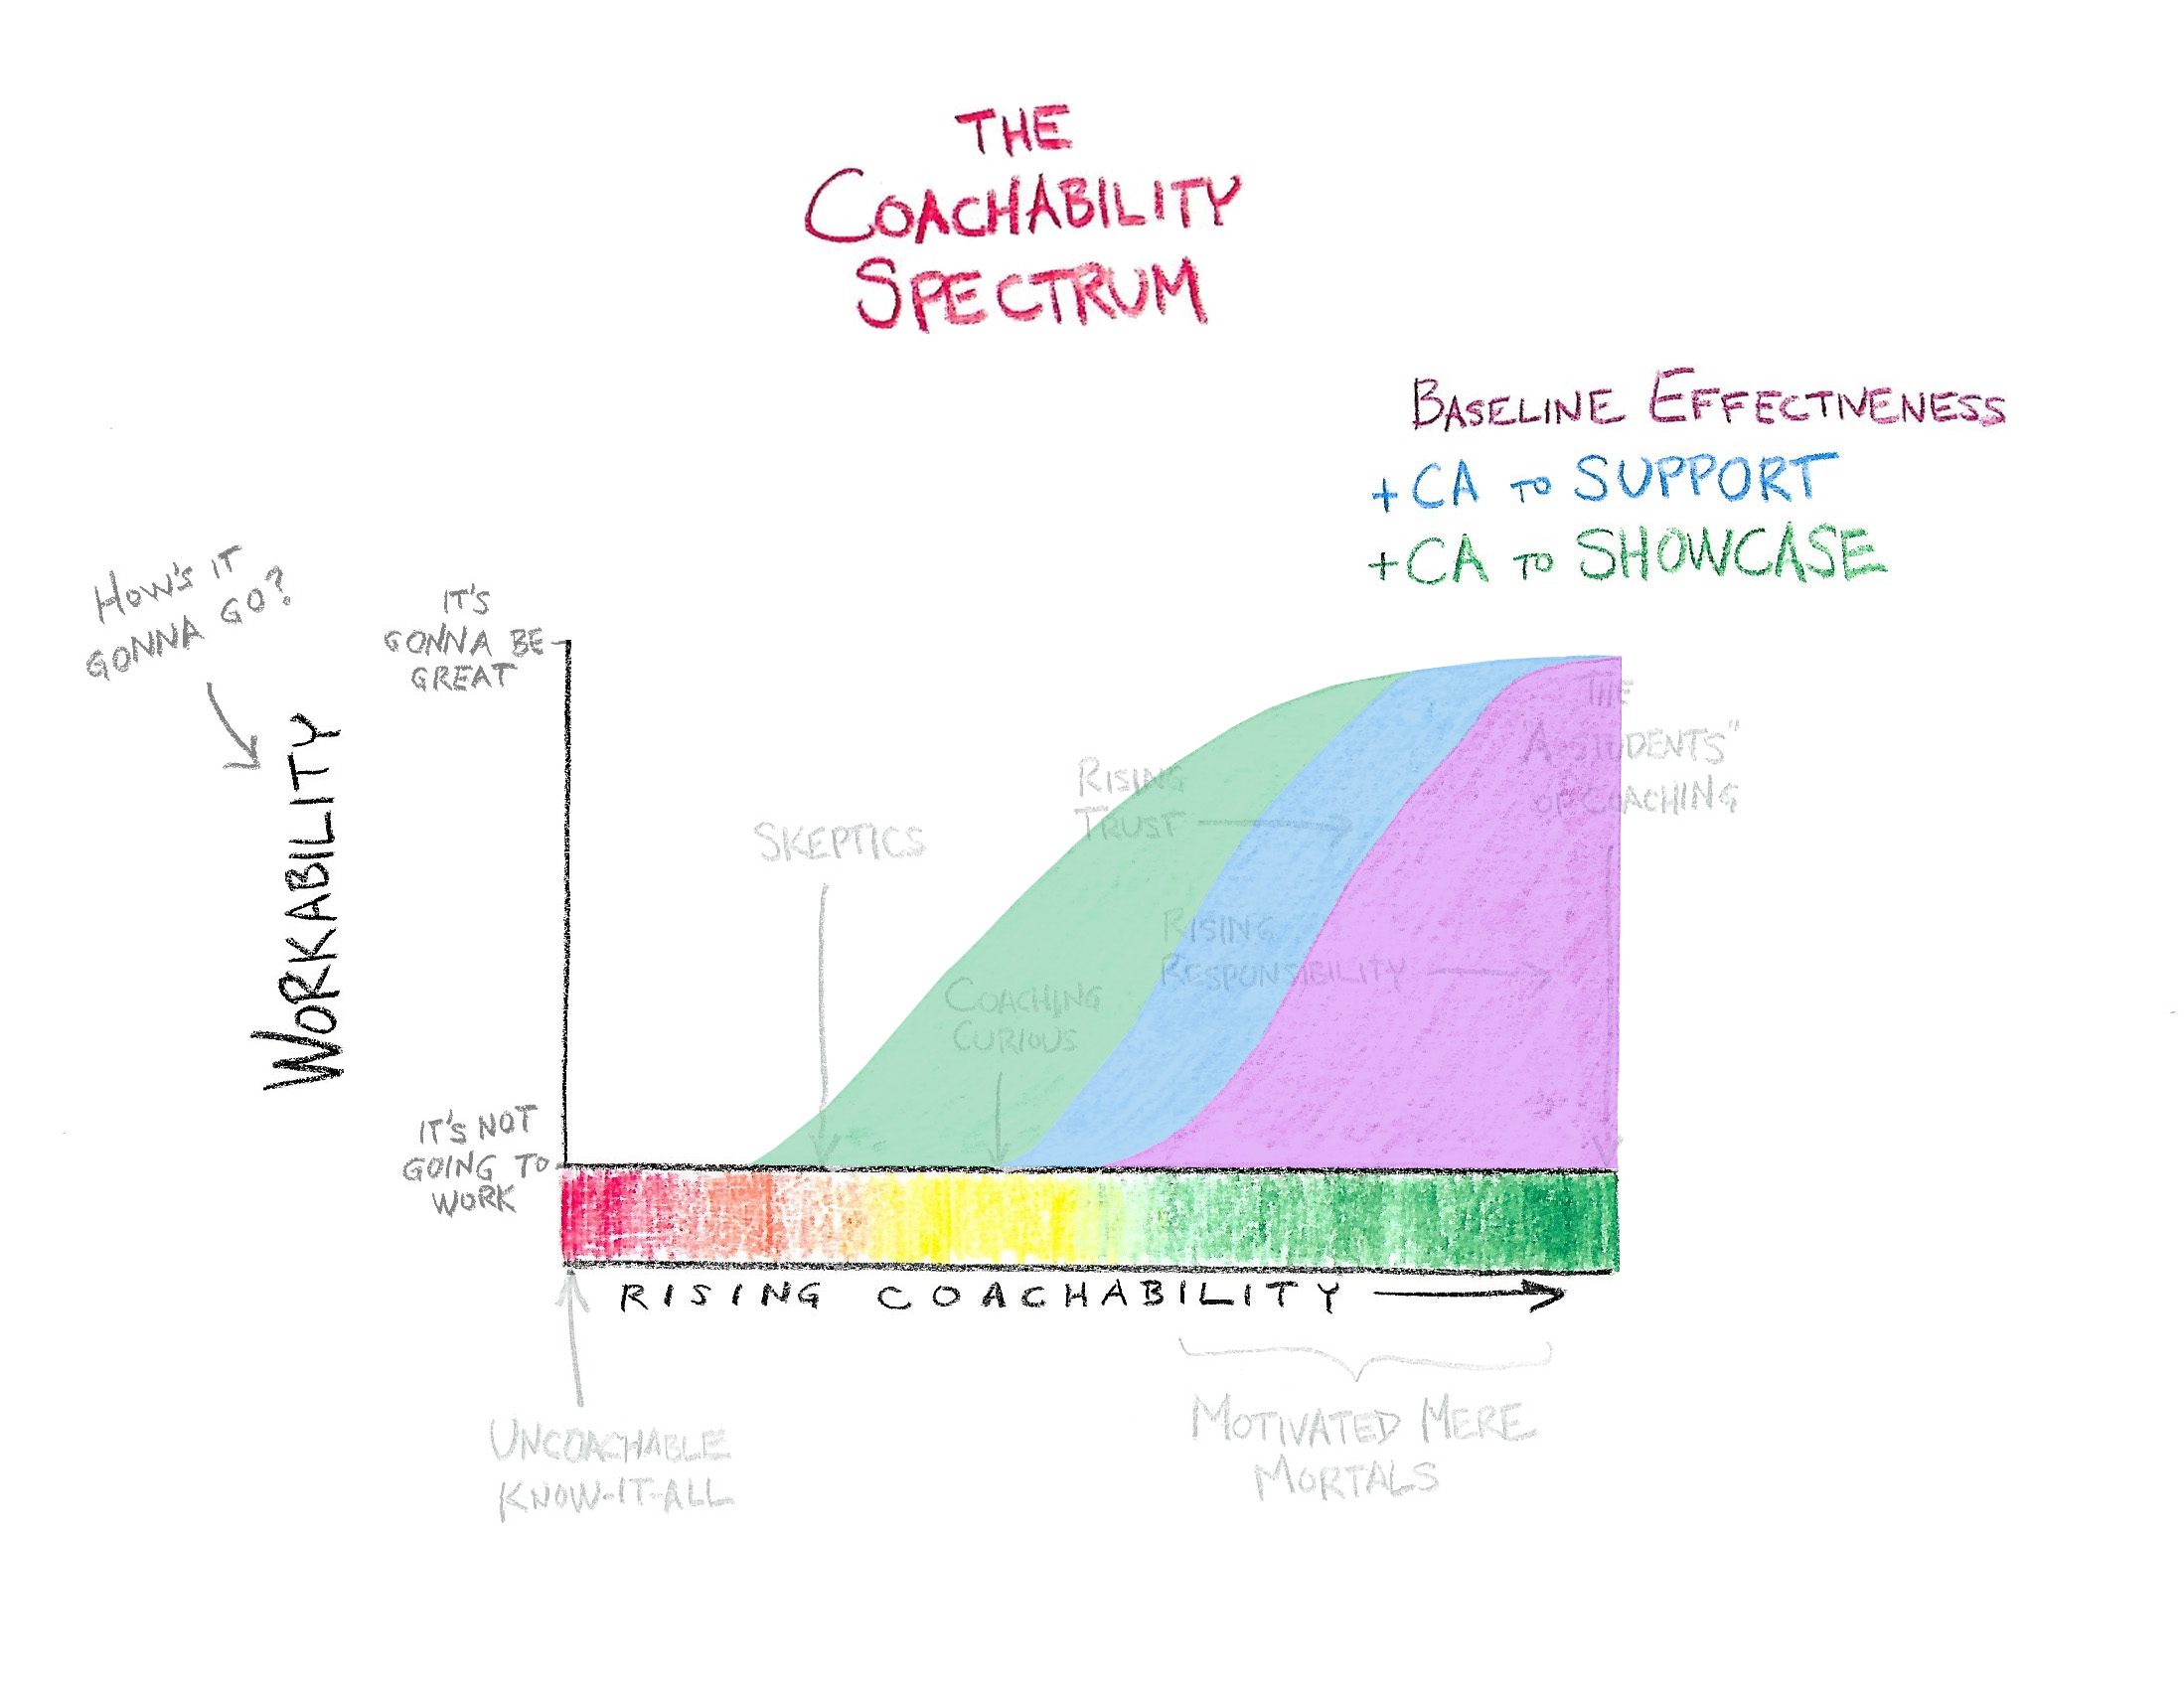 Hand-drawn diagram of The Coachability Spectrum